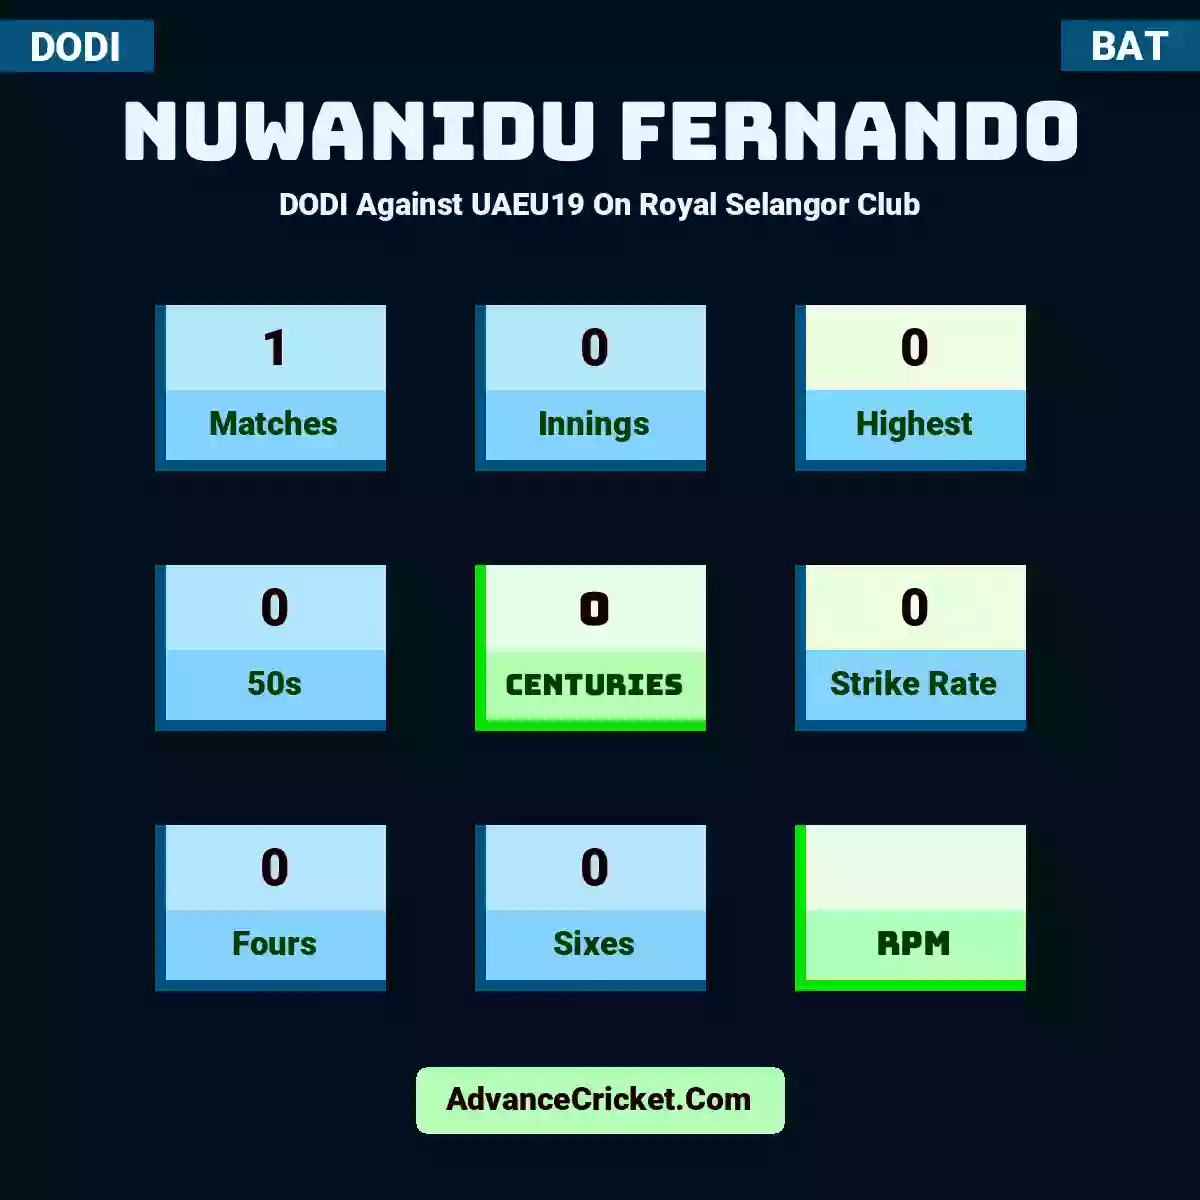 Nuwanidu Fernando DODI  Against UAEU19 On Royal Selangor Club, Nuwanidu Fernando played 1 matches, scored 0 runs as highest, 0 half-centuries, and 0 centuries, with a strike rate of 0. N.Fernando hit 0 fours and 0 sixes.